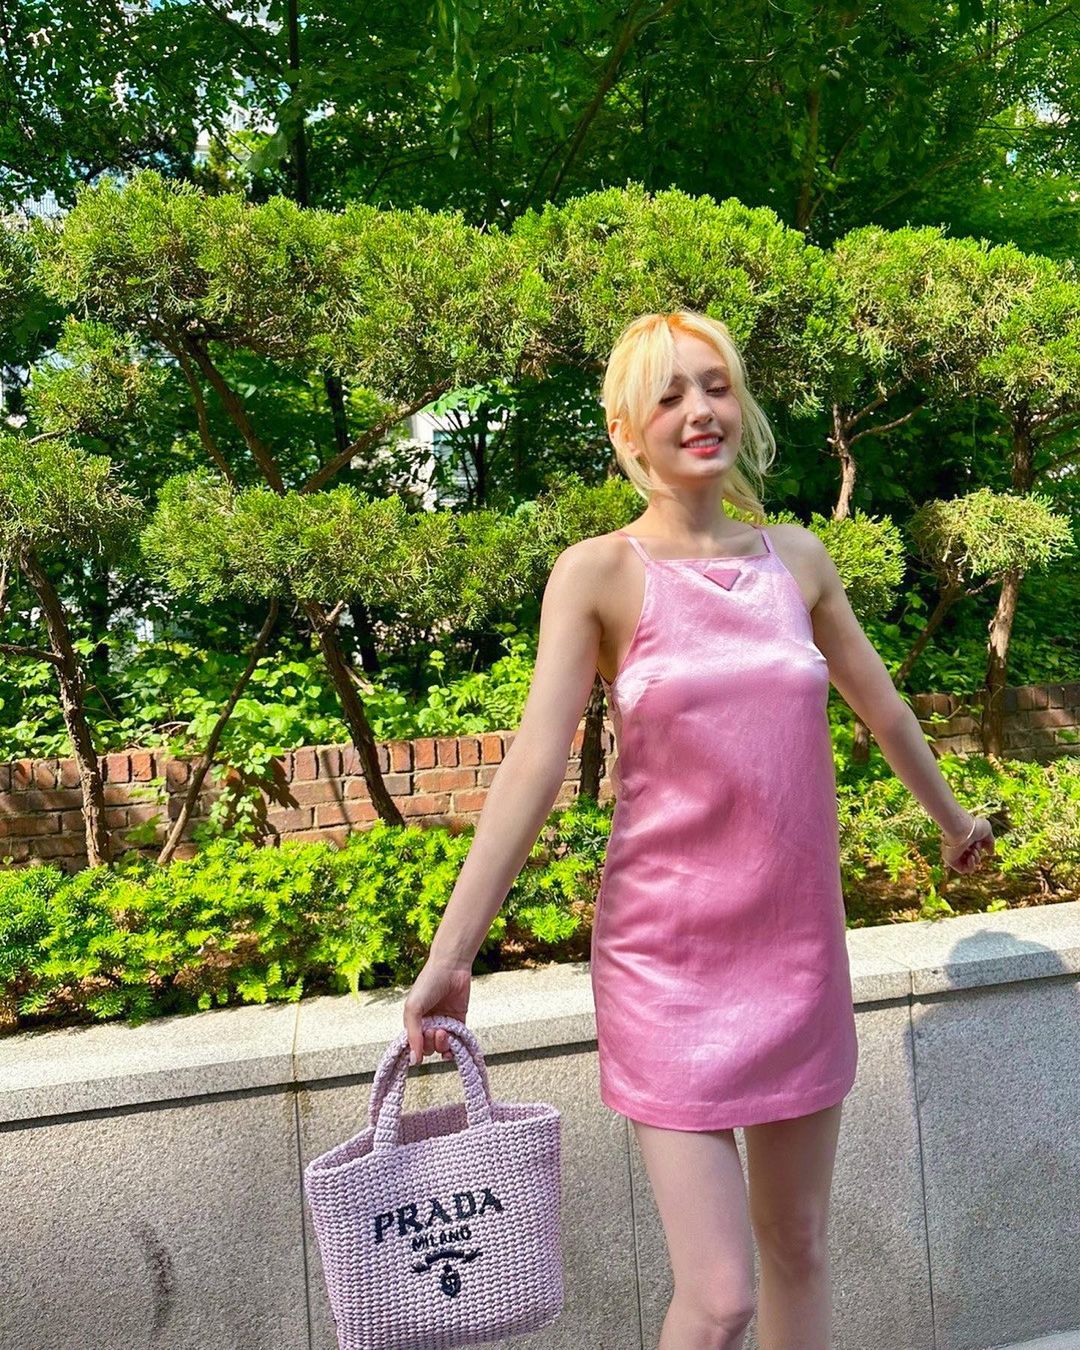 JEON SOMI, blonde + pink dress… It's a living Barbie doll